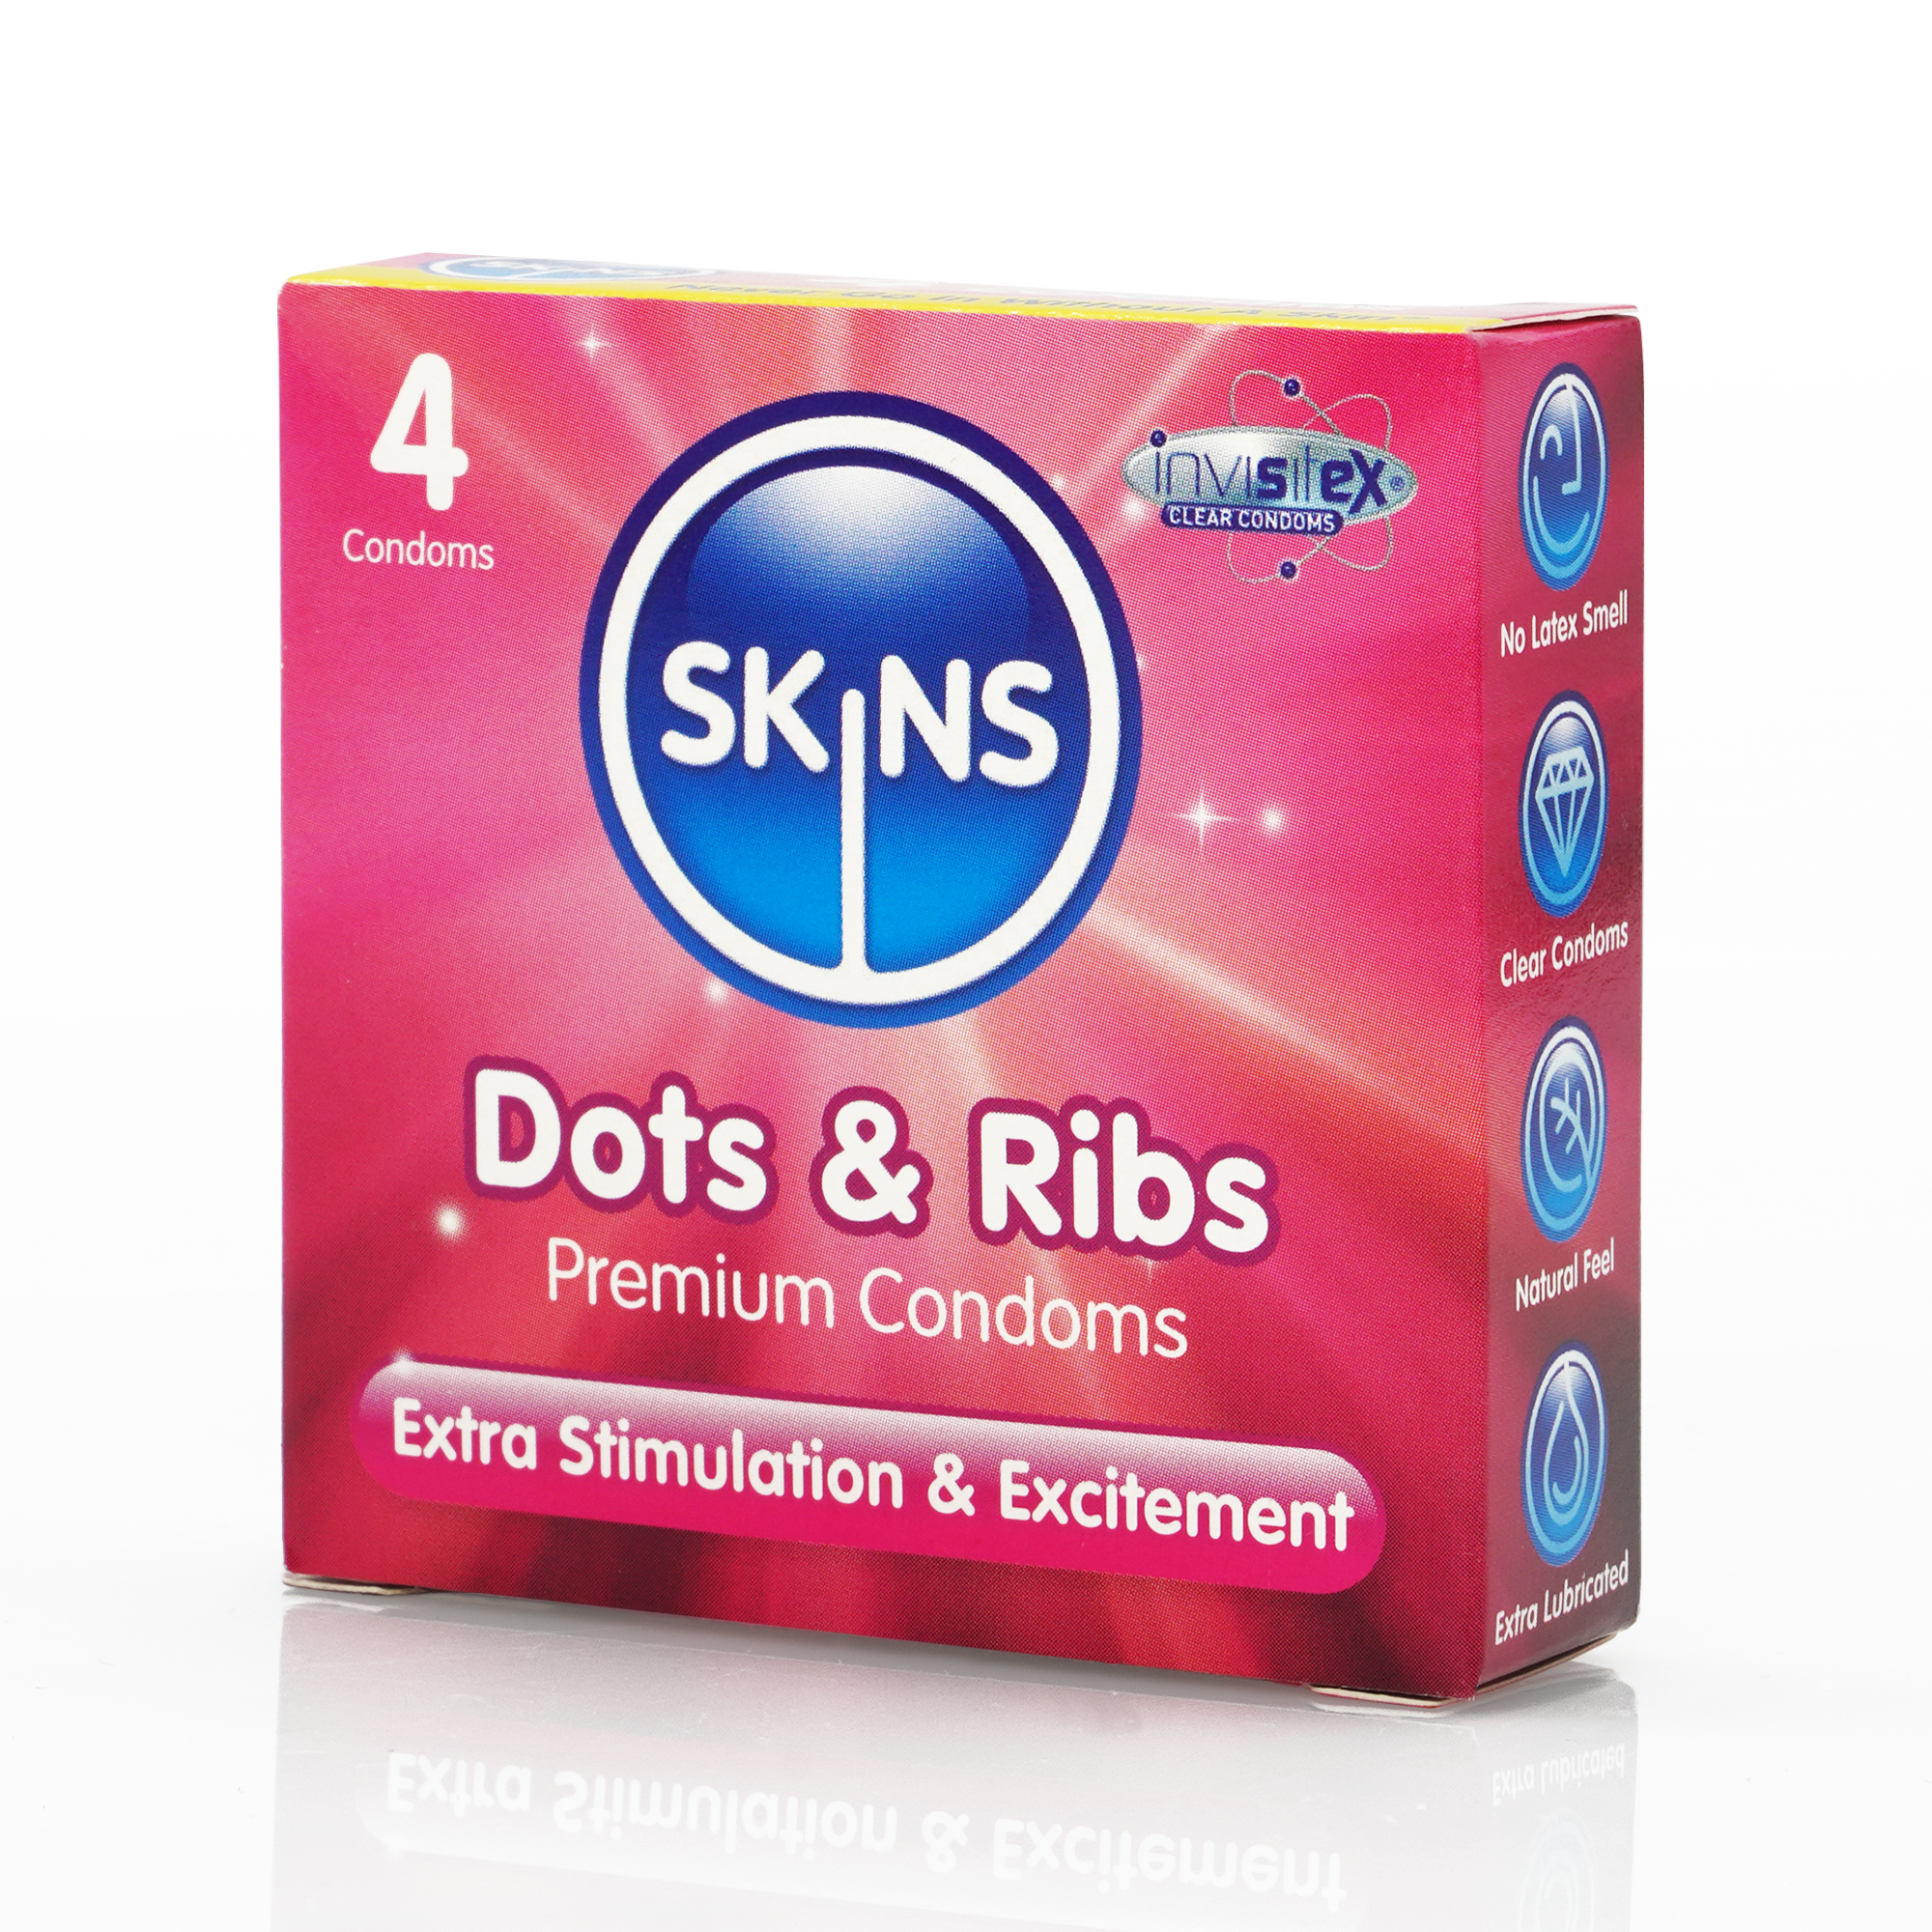 Skins Dots & Ribs Condom-4 pack